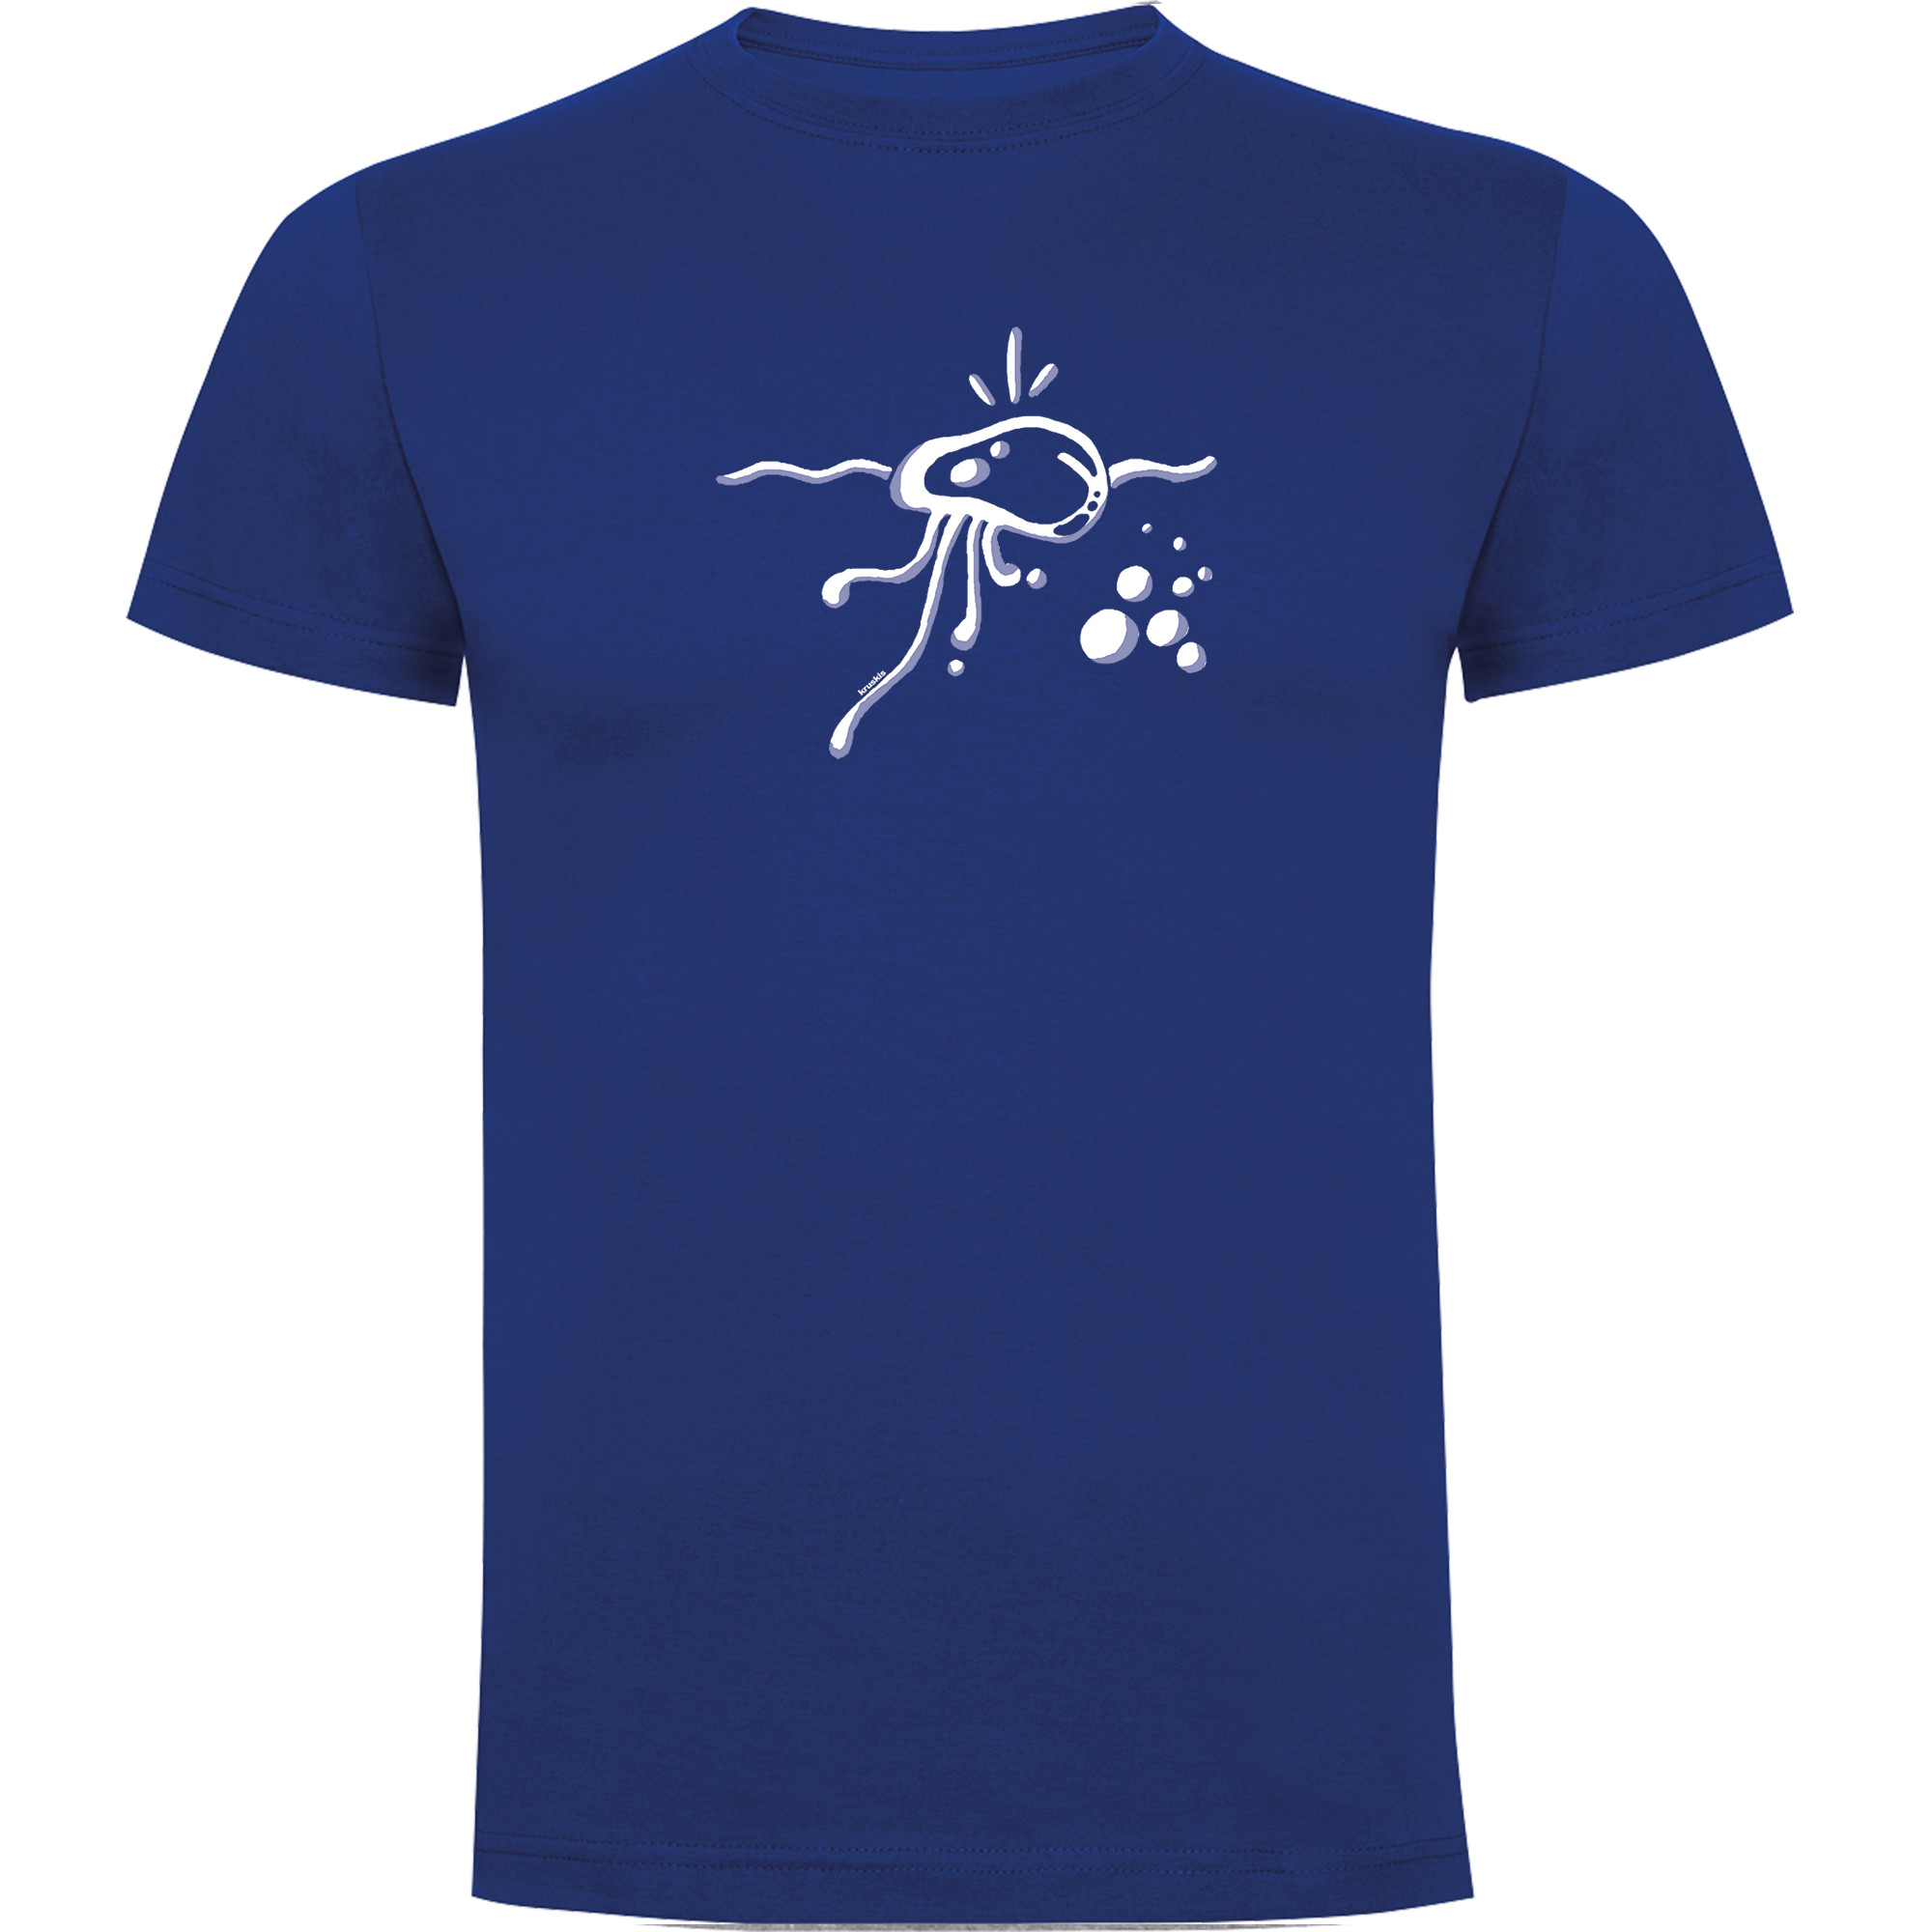 Camiseta Buceo Medusa Manga Corta Hombre